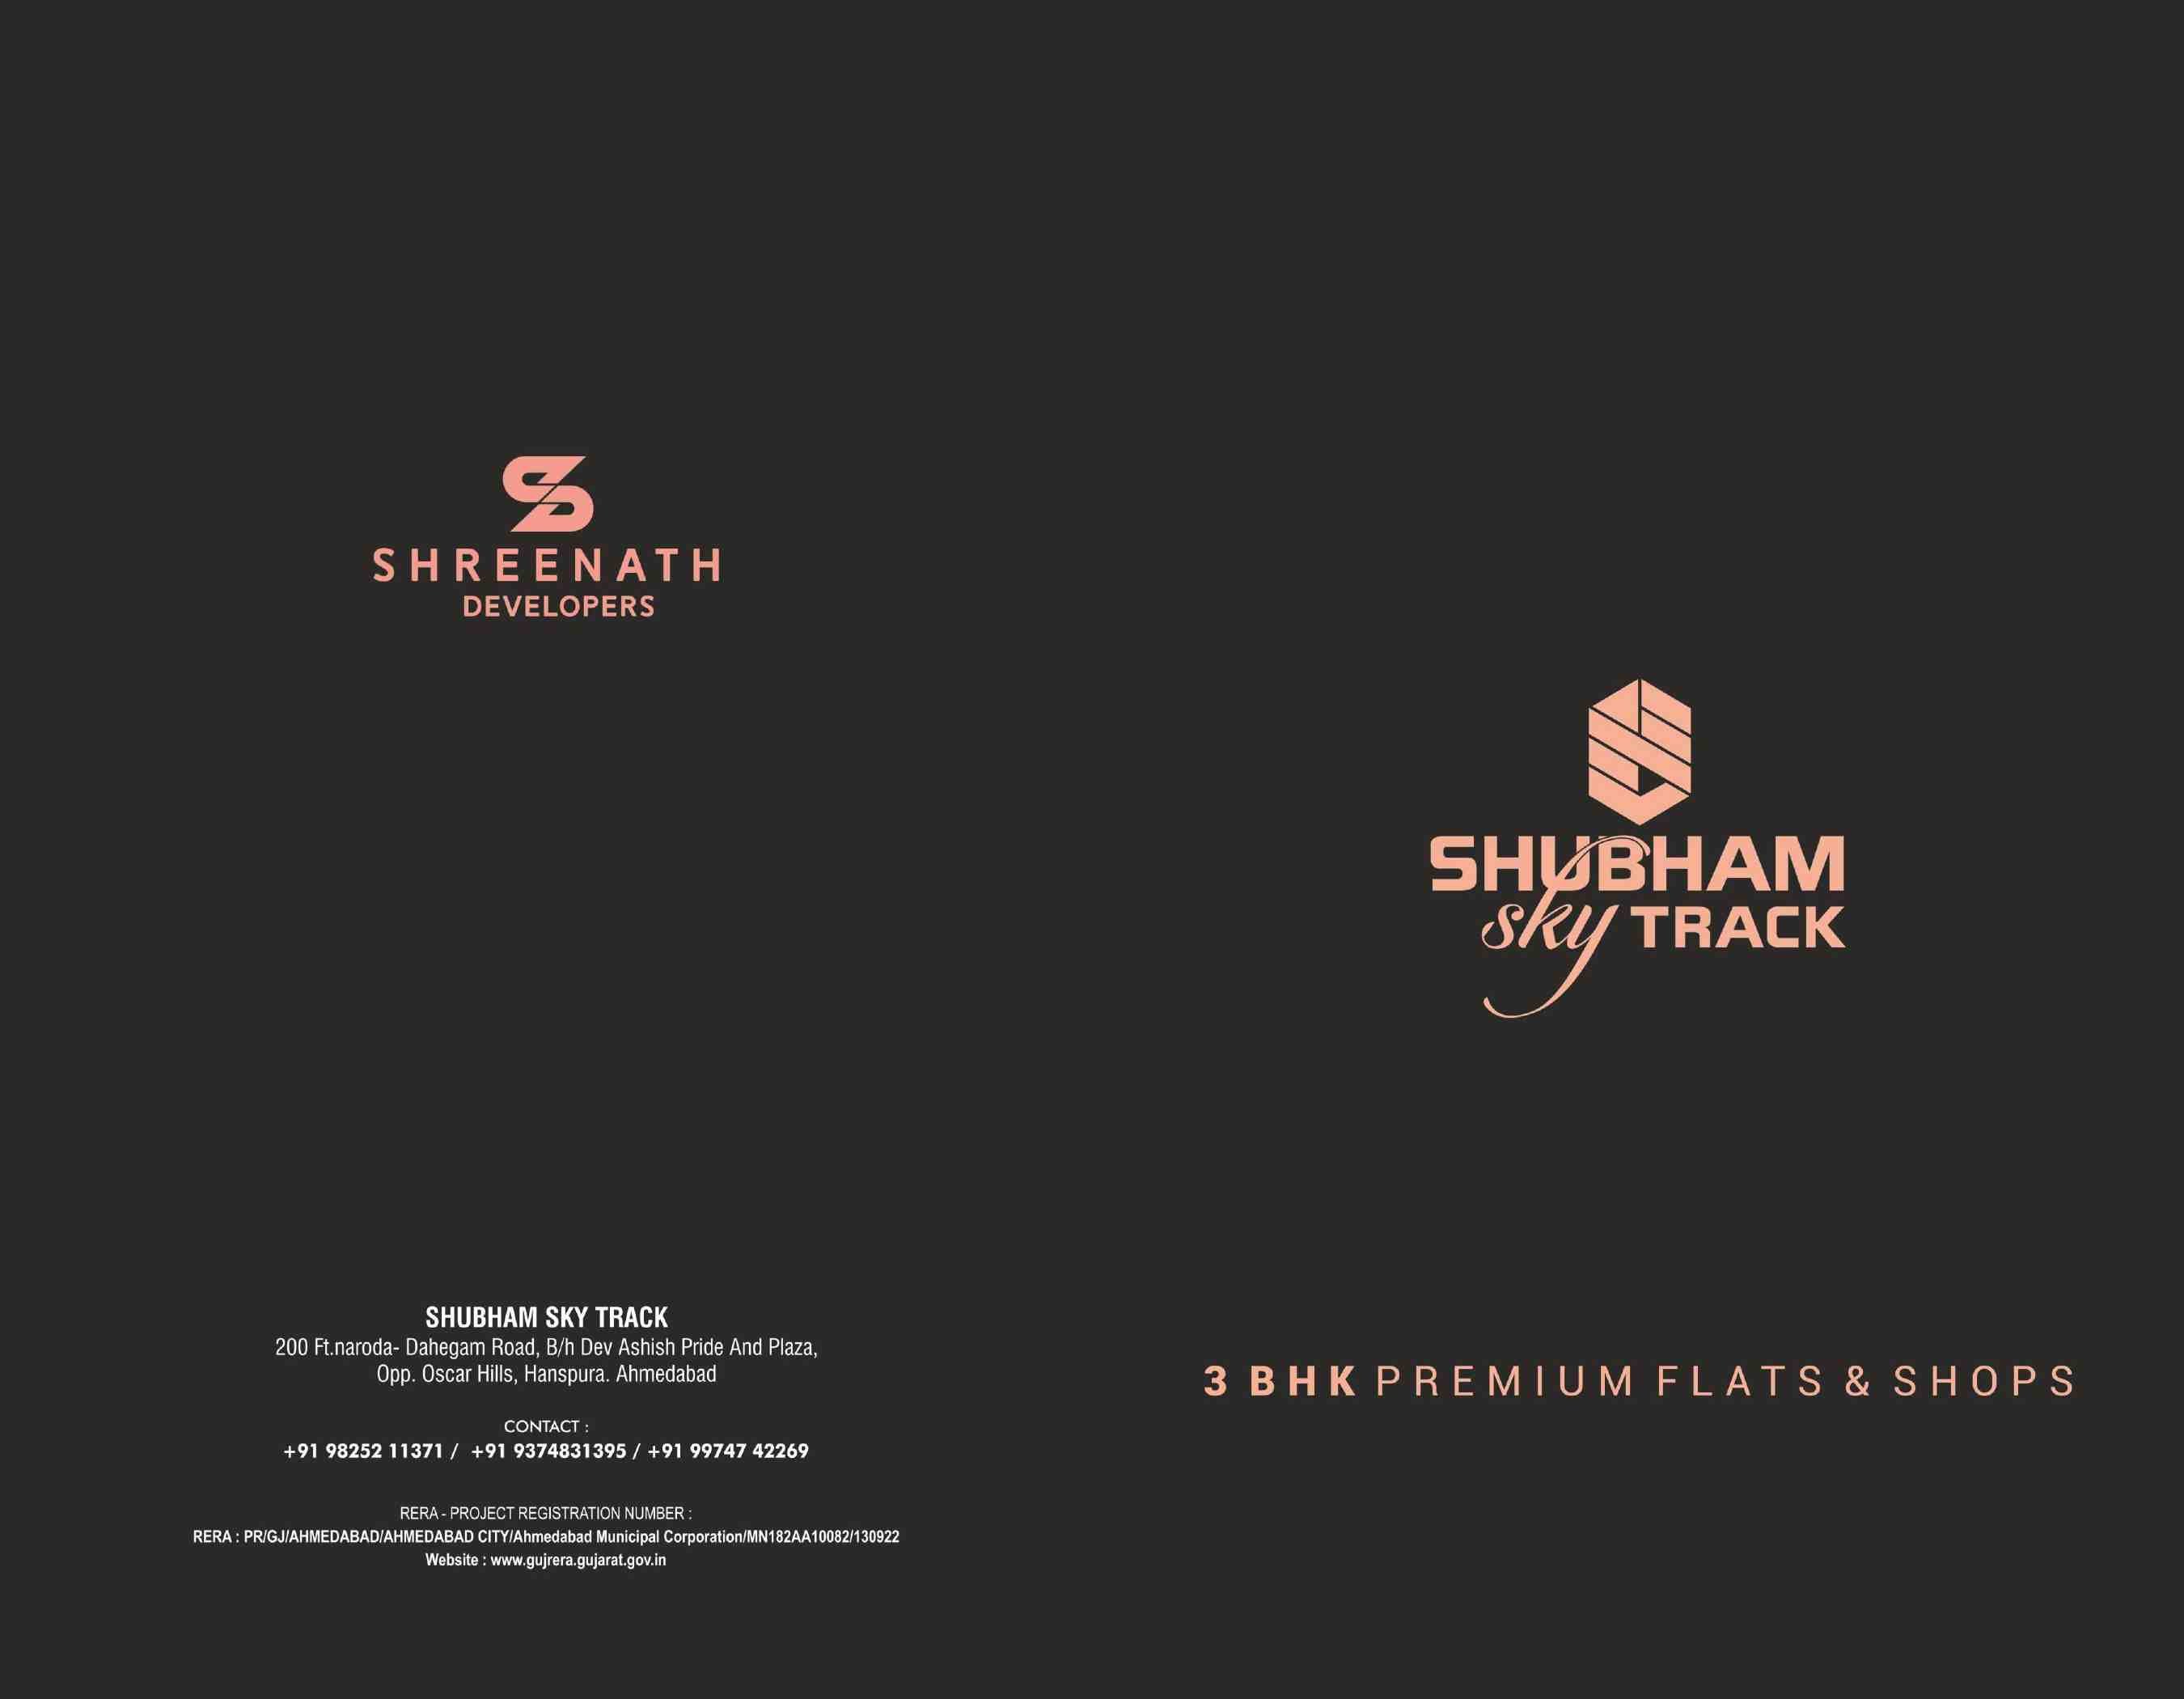 Shubham Sky Track